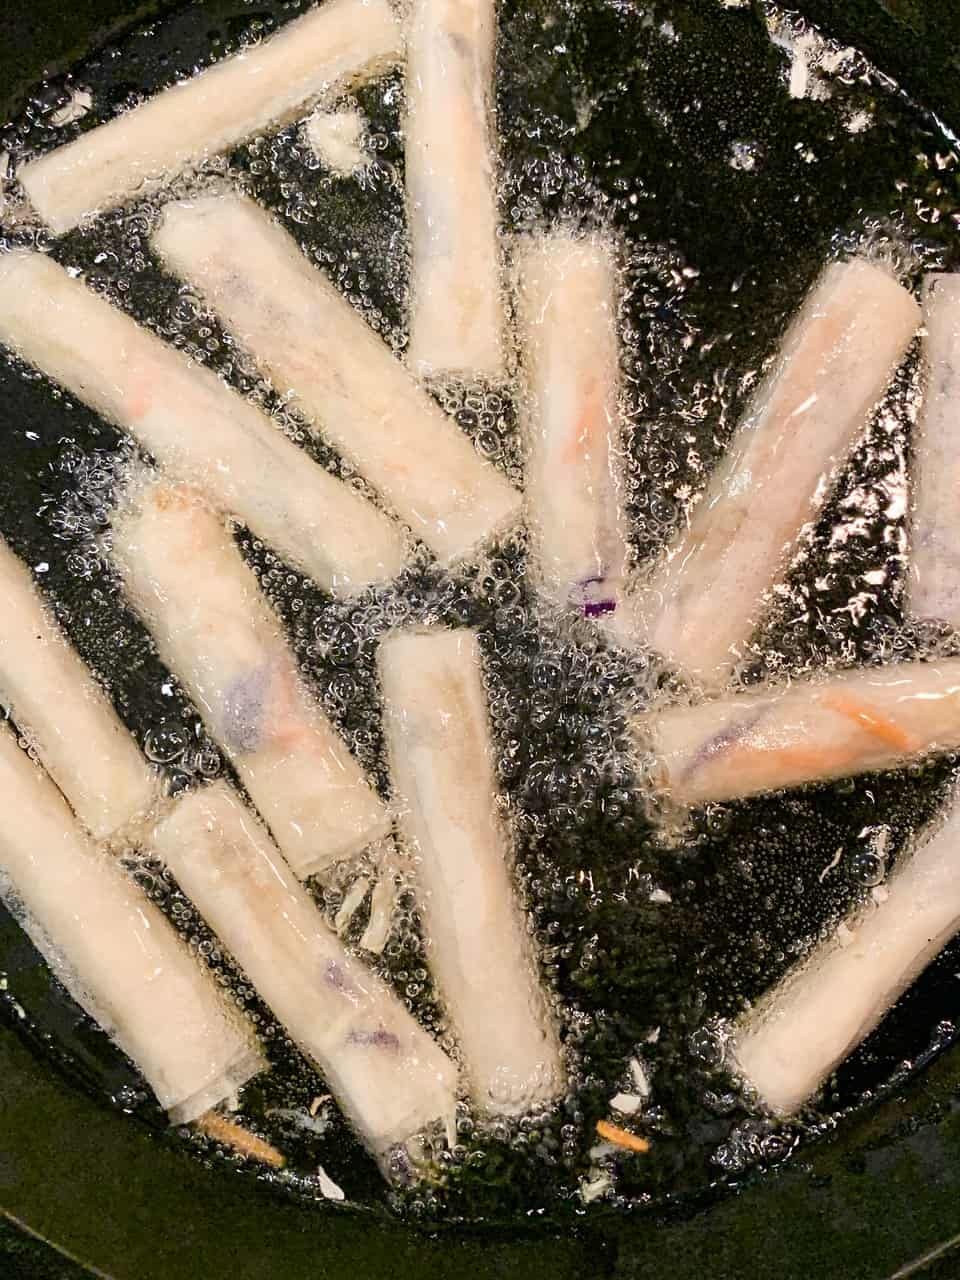 deep frying Filipino spring rolls